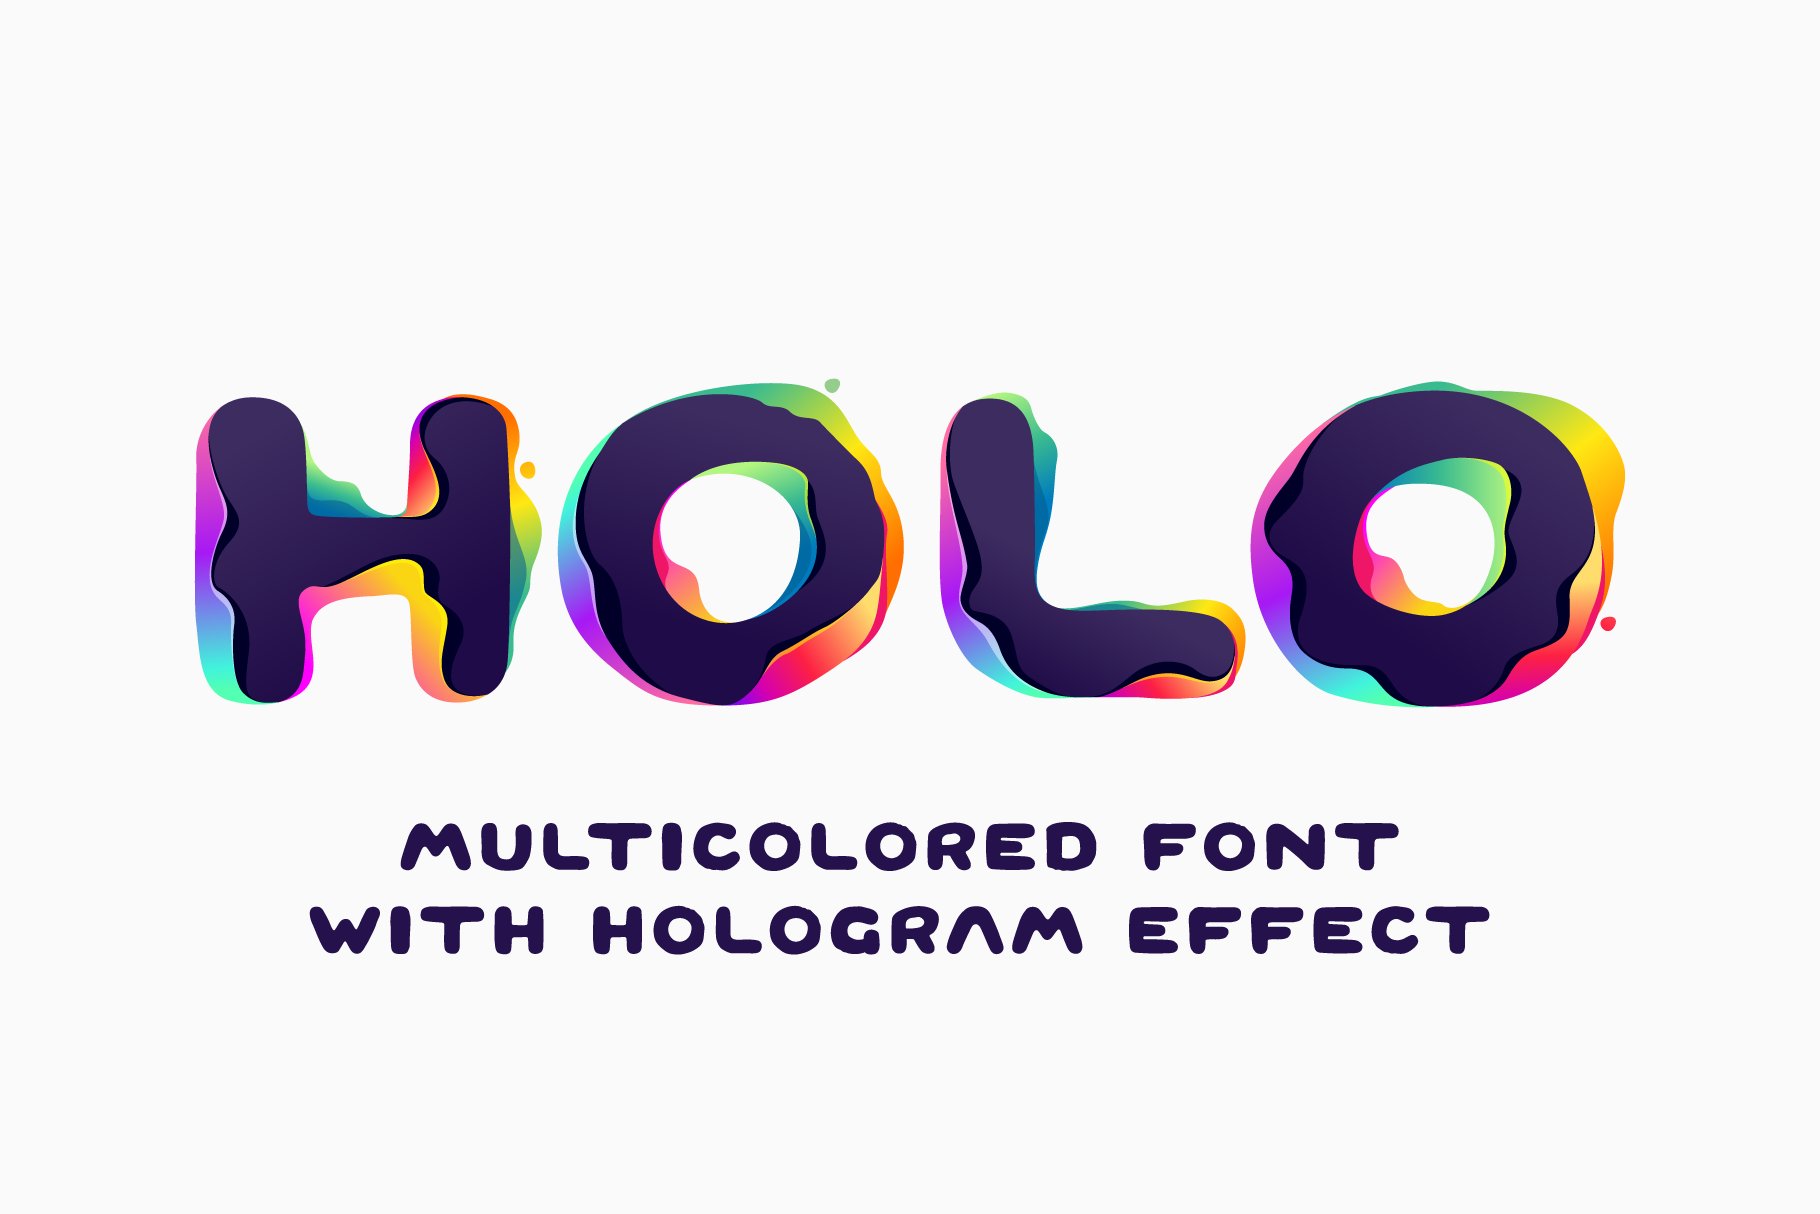 Hologram Shift colorful glitch font cover image.